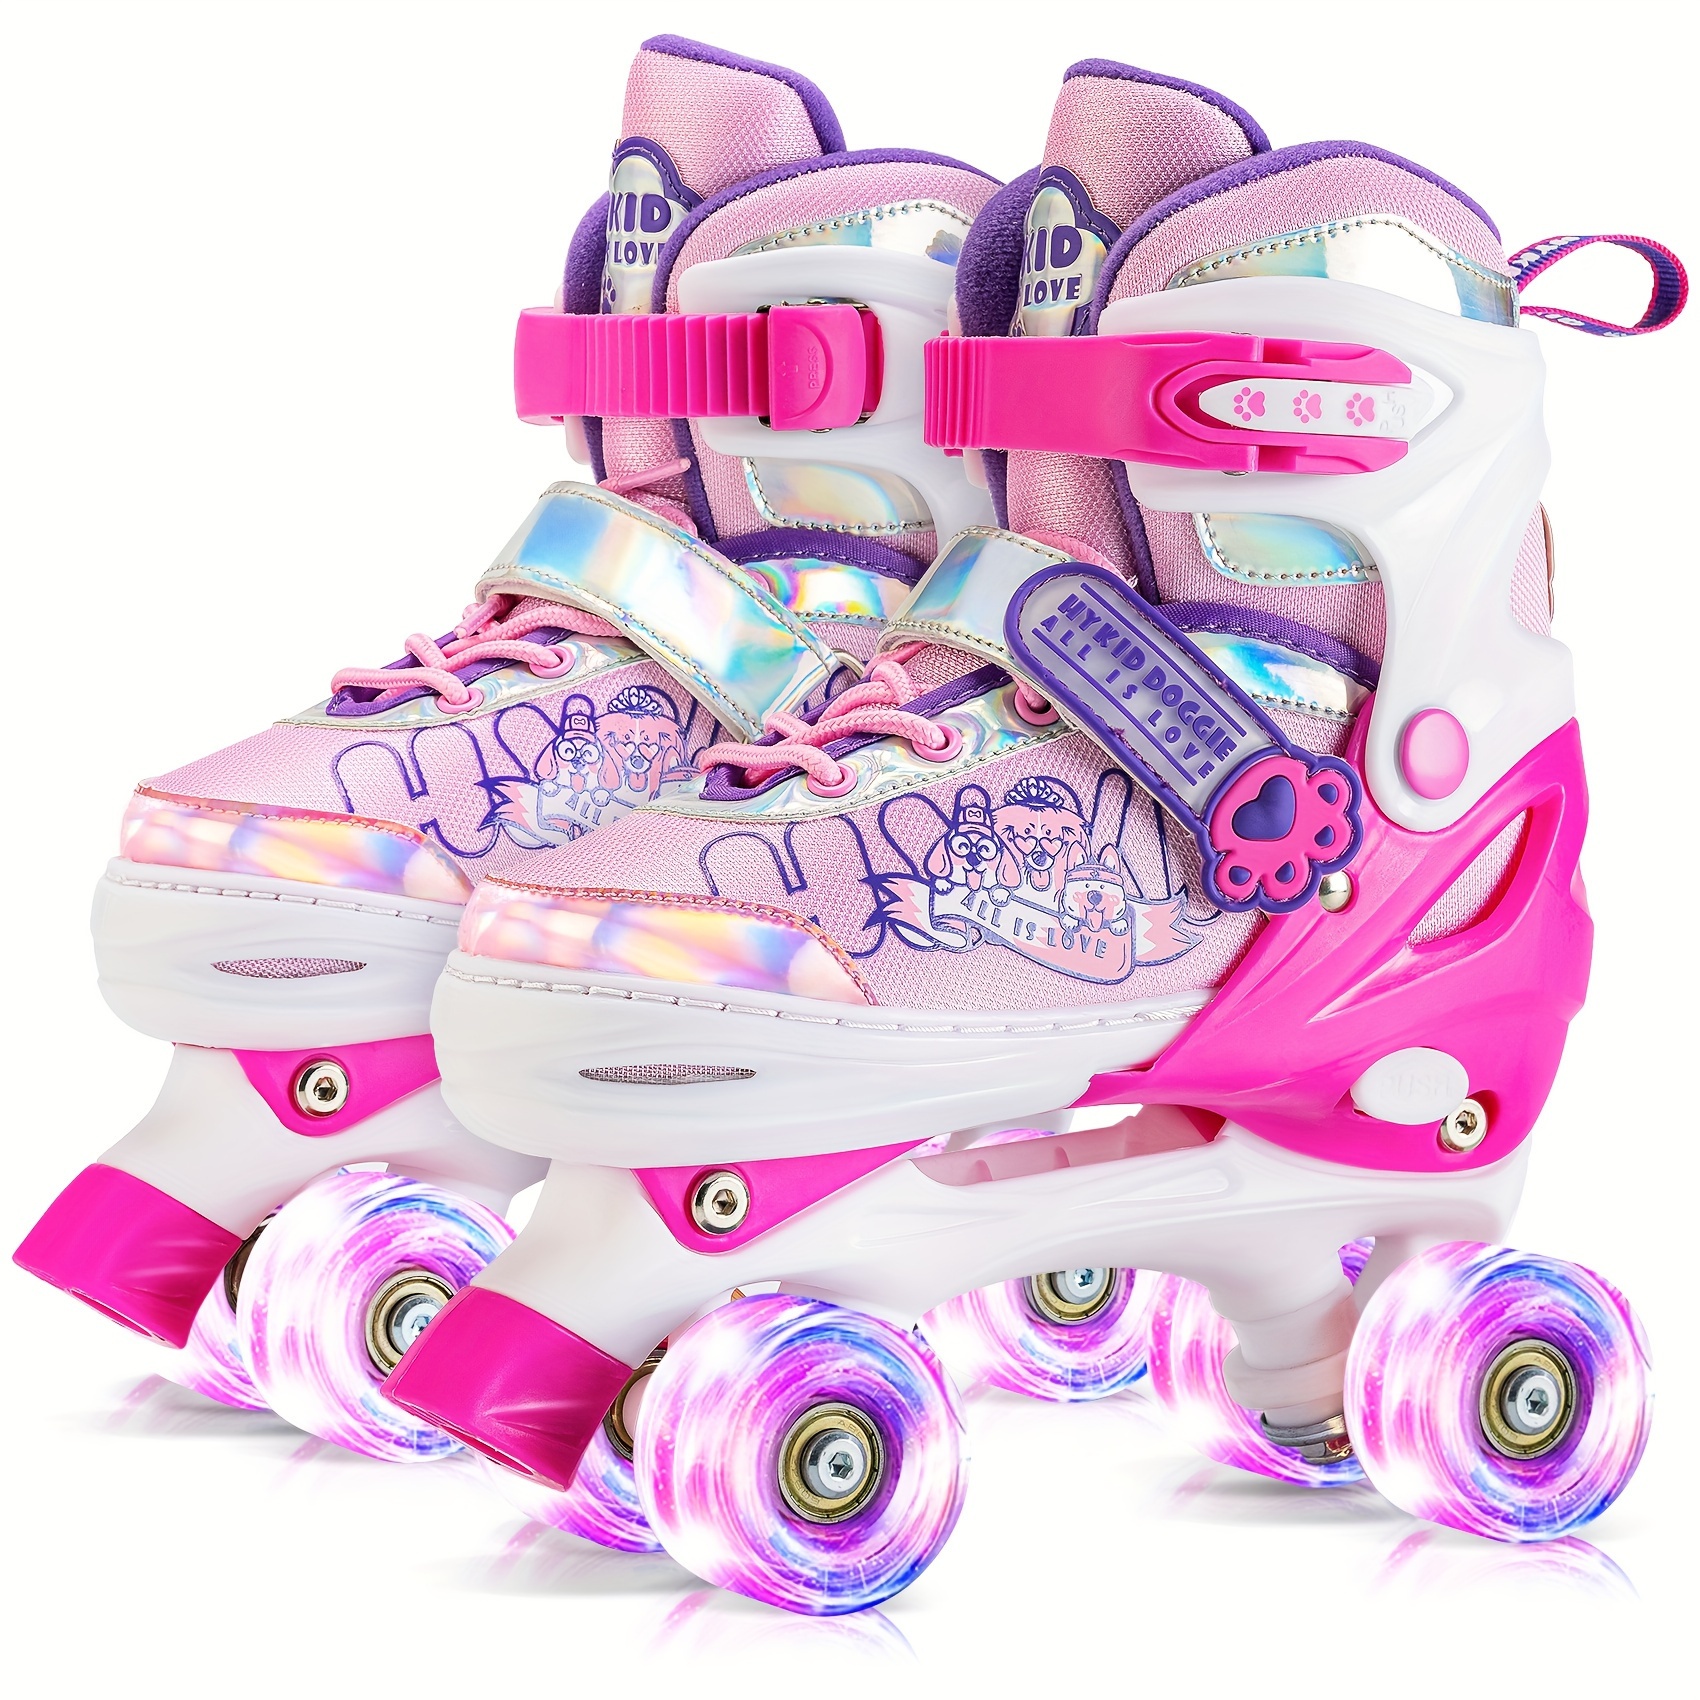 

Roller Skates Adjustable Size Double Roller Skates With All Wheels Light Up Fun Illuminating Roller Skates Beginners